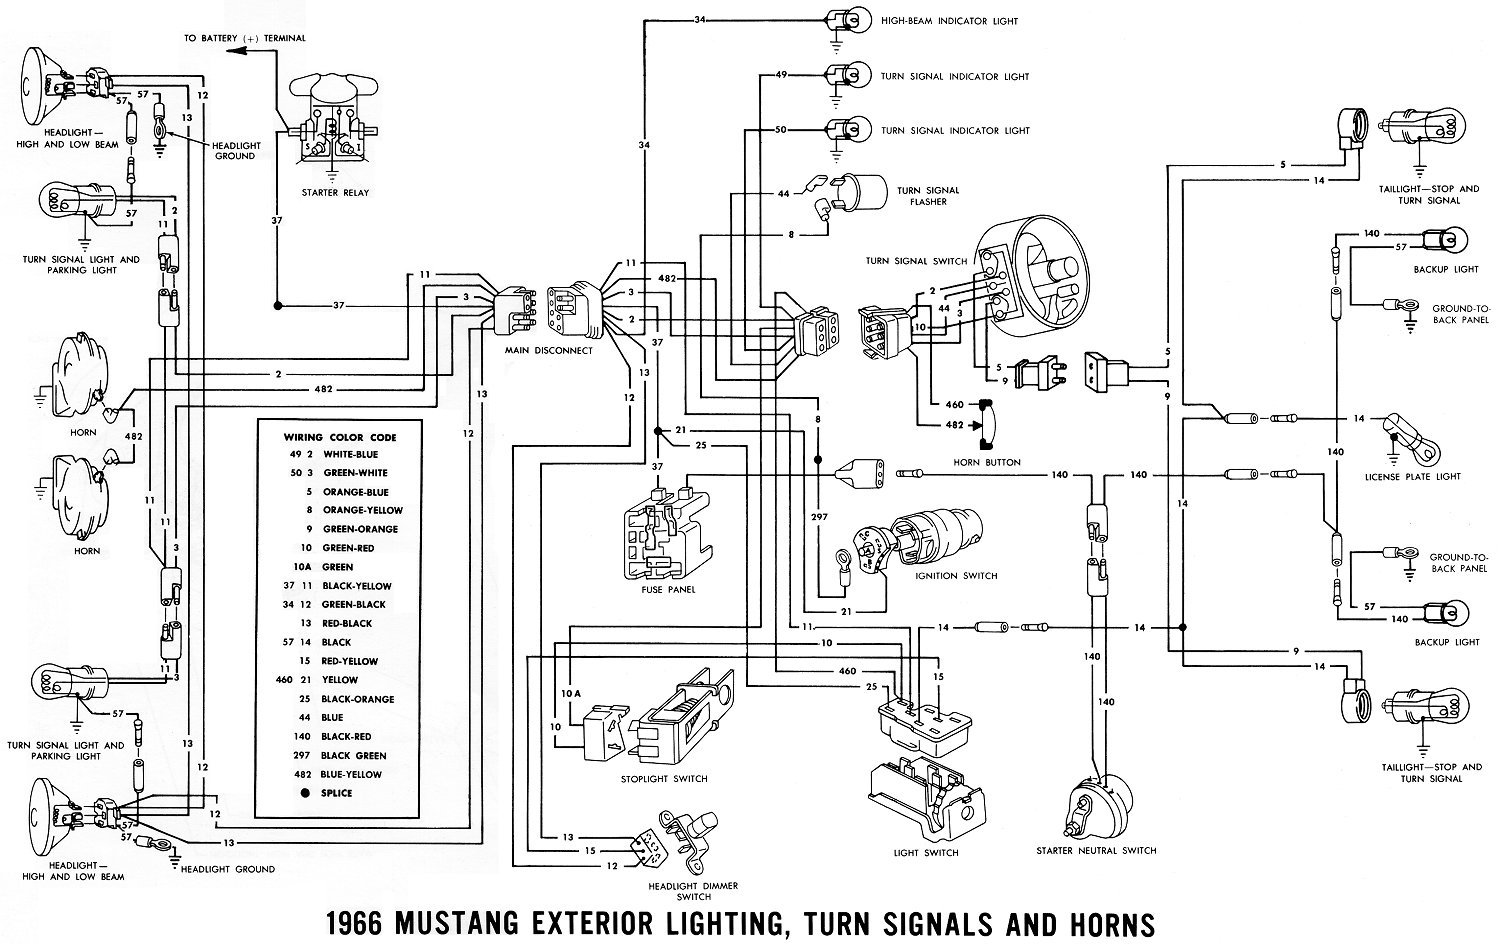 1989 Mustang Turn Signal Switch Wiring Diagram from averagejoerestoration.com